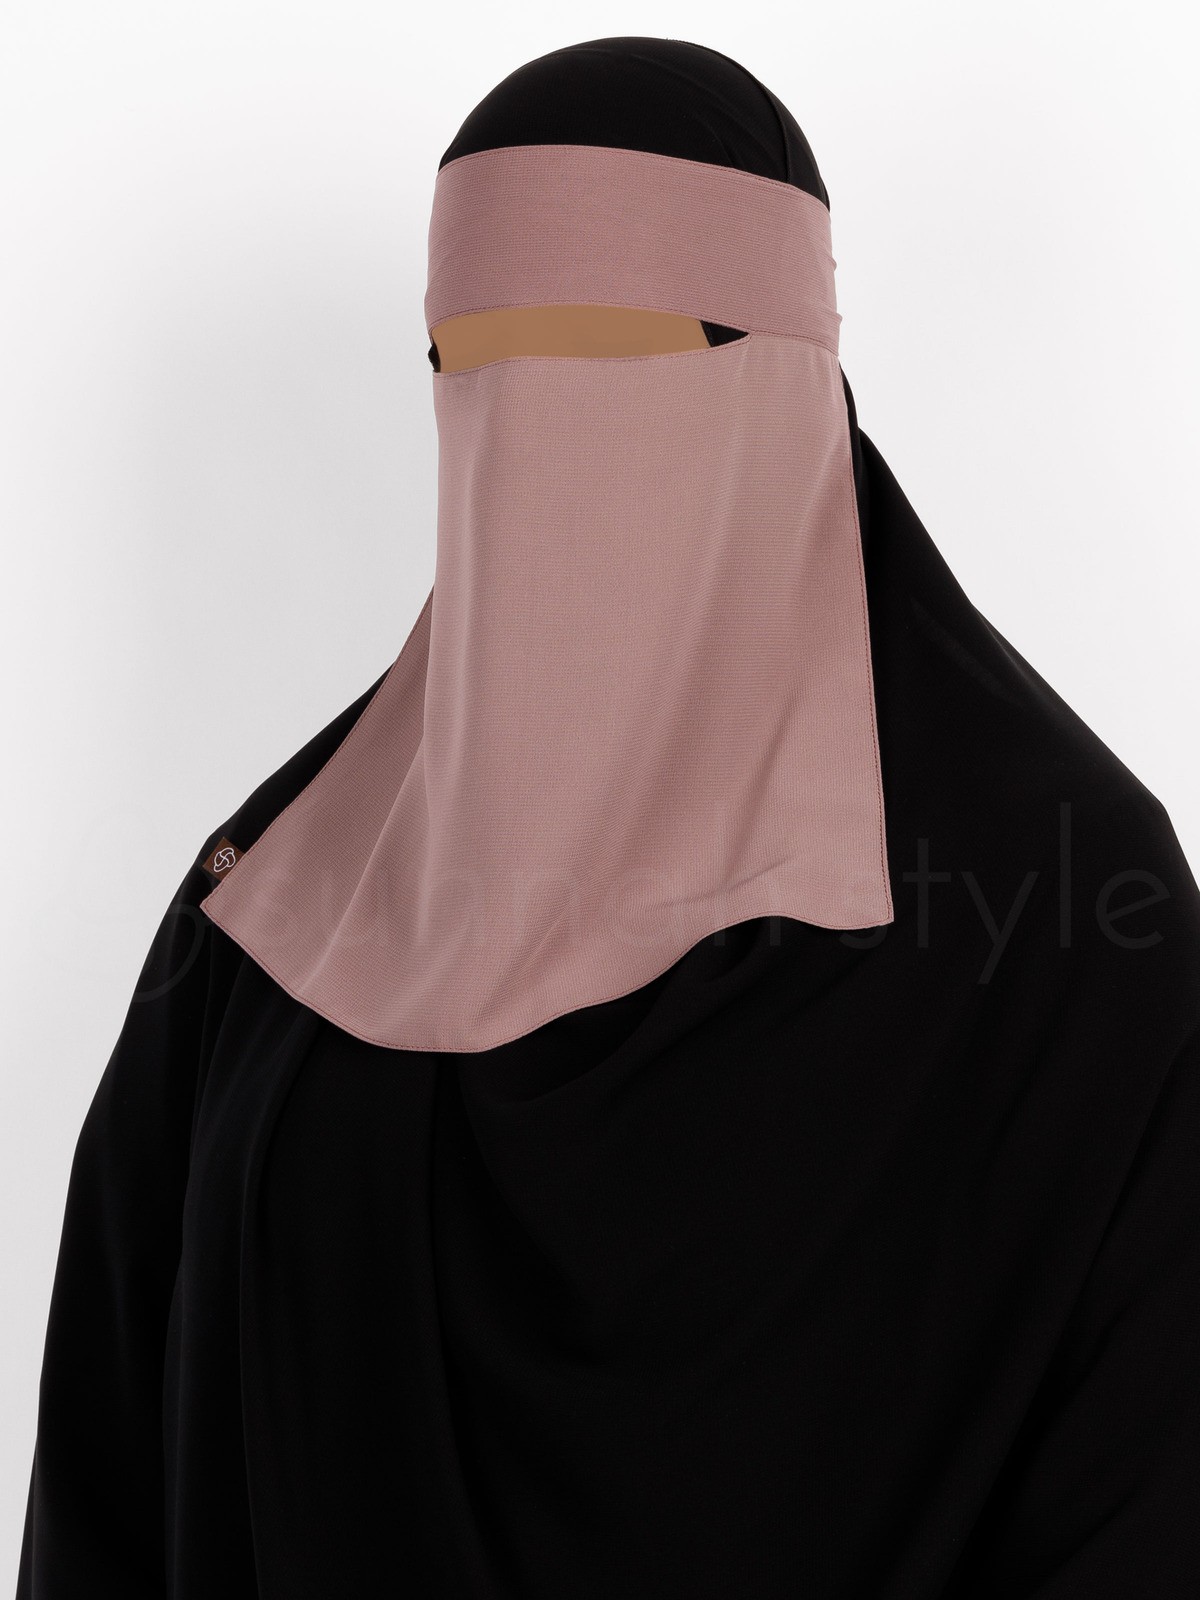 Sunnah Style - Short One Layer Niqab (Twilight Mauve)